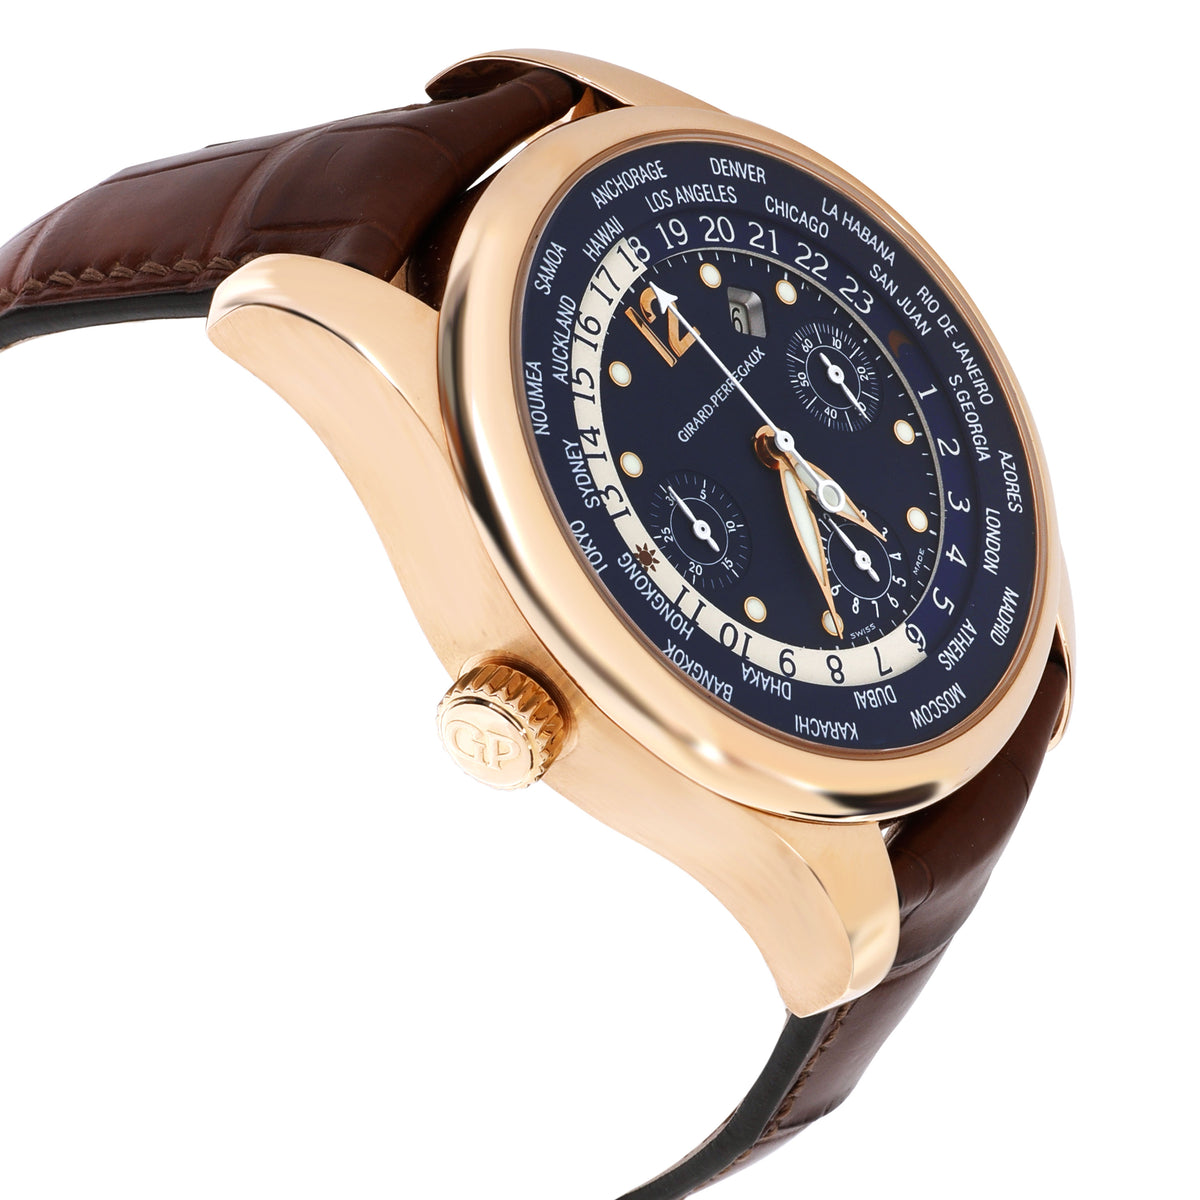 Girard Perregaux WW.TC World Time 49805 Men's Watch in 18kt Rose Gold